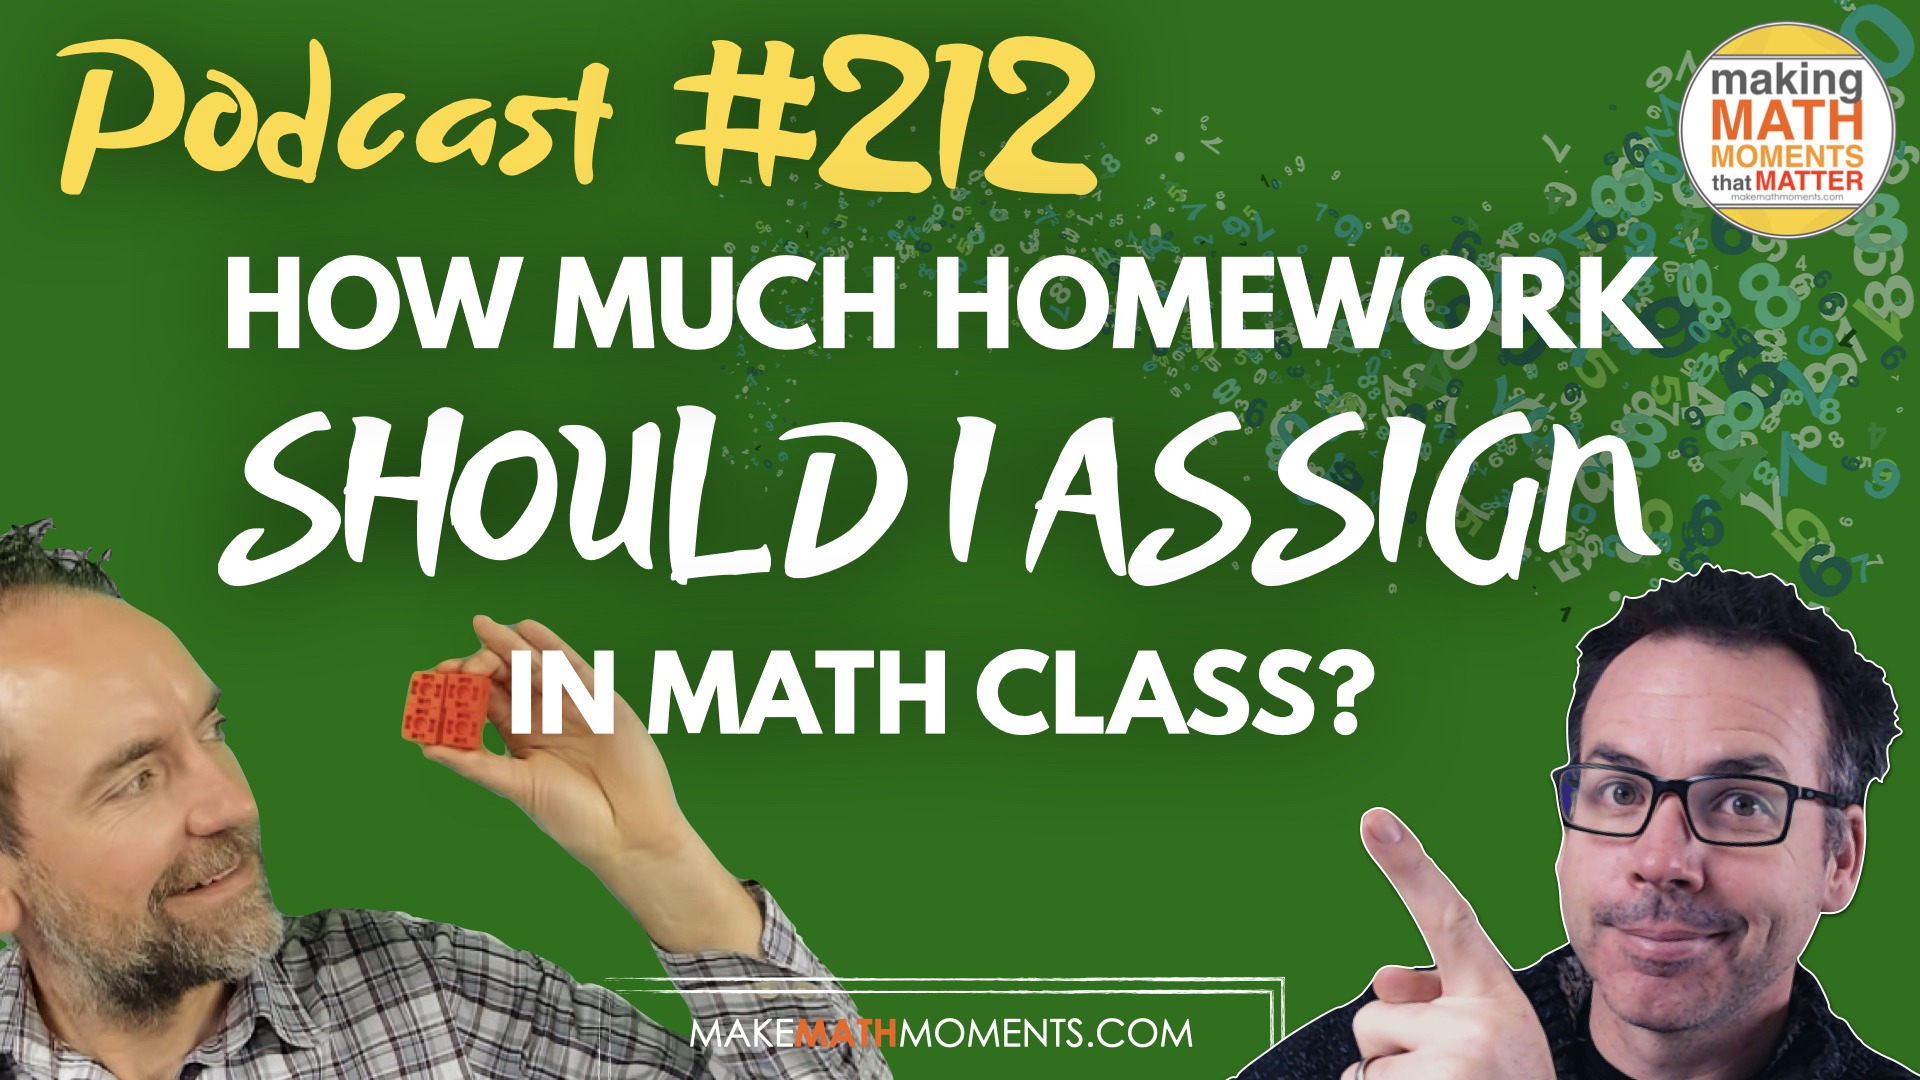 Episode #212: How Much Homework Should I Assign in Math Class?